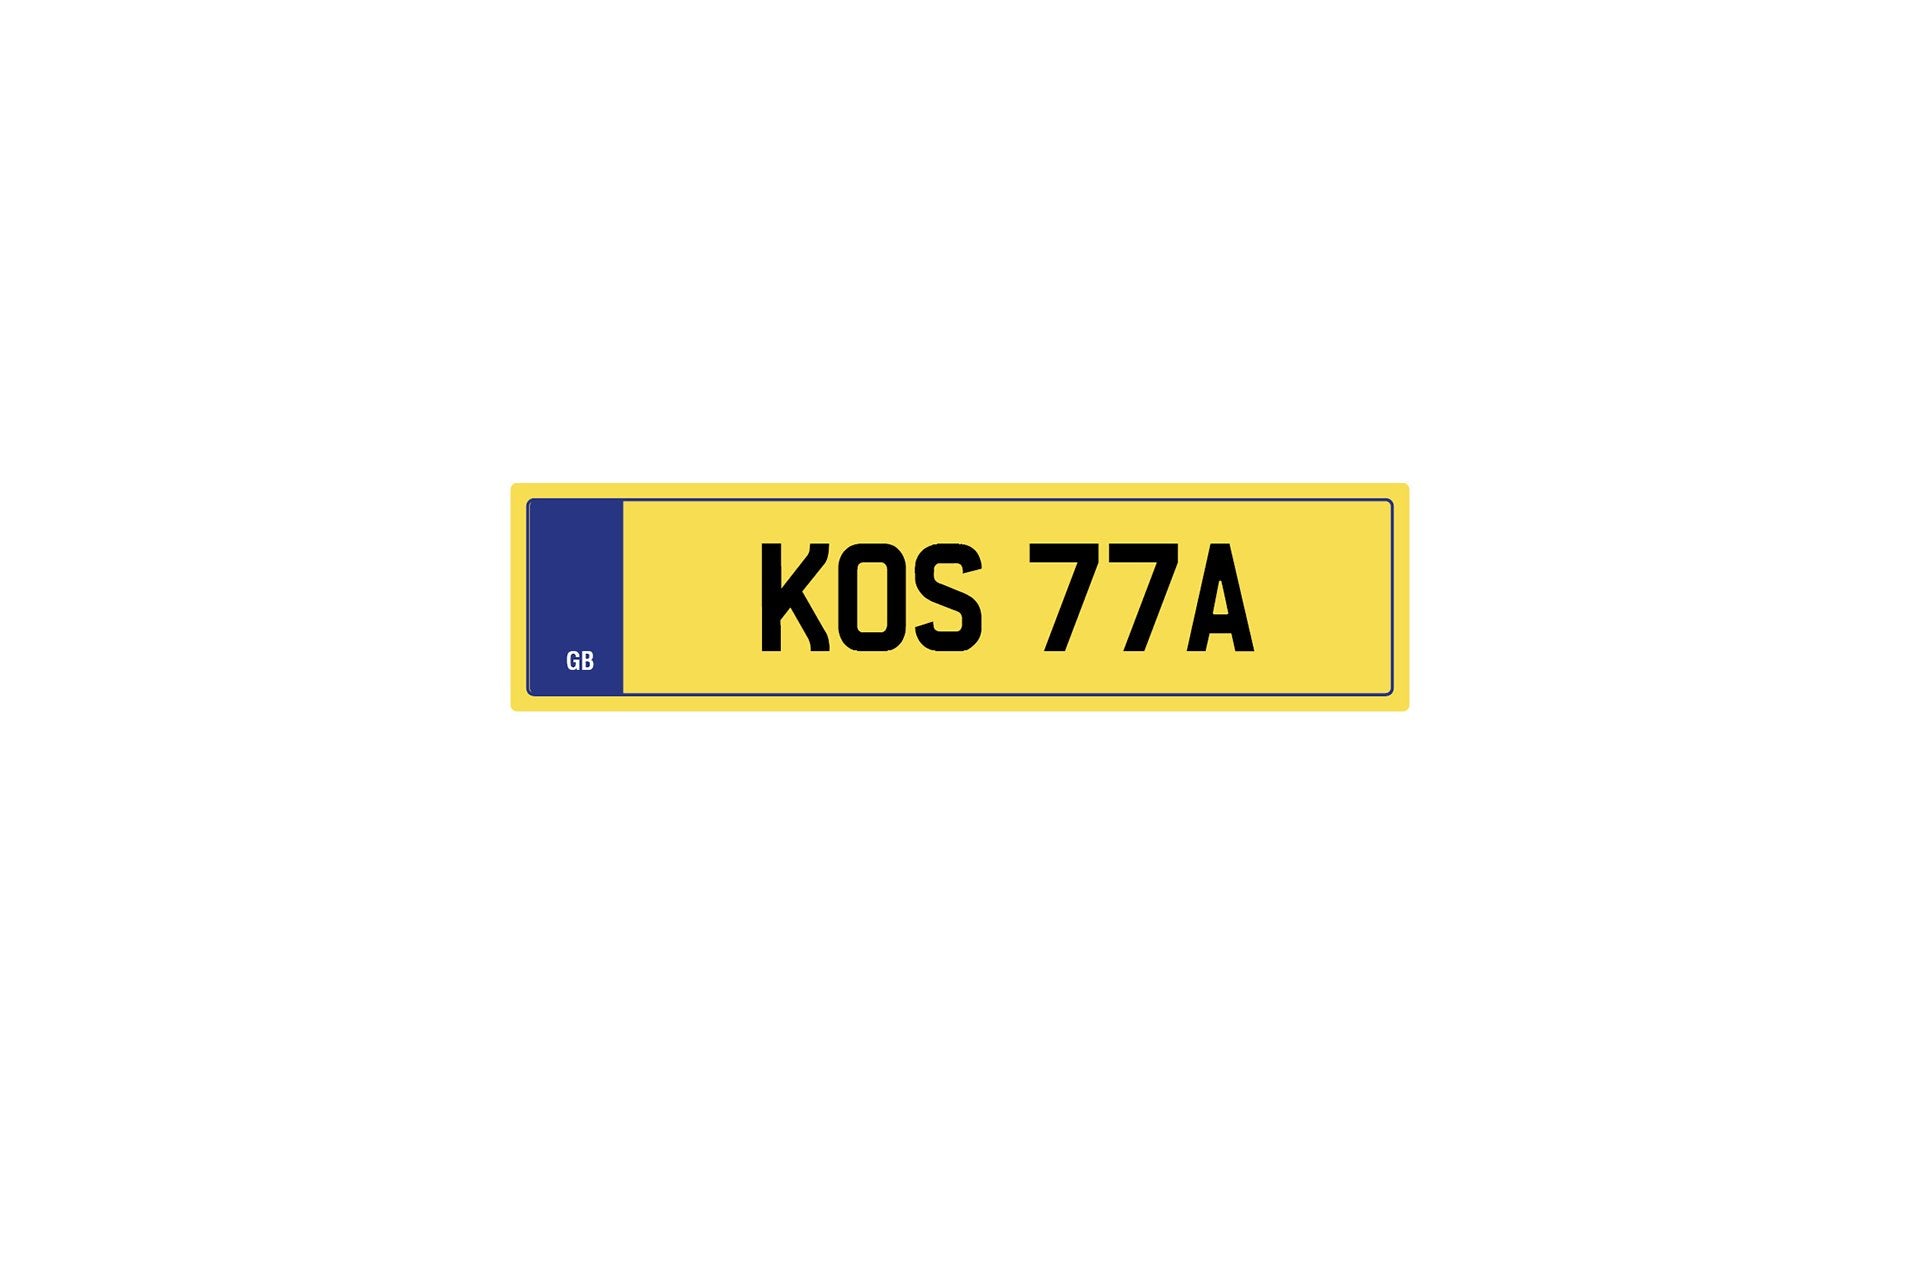 Private Plate Kos 77A by Kahn - Image 211